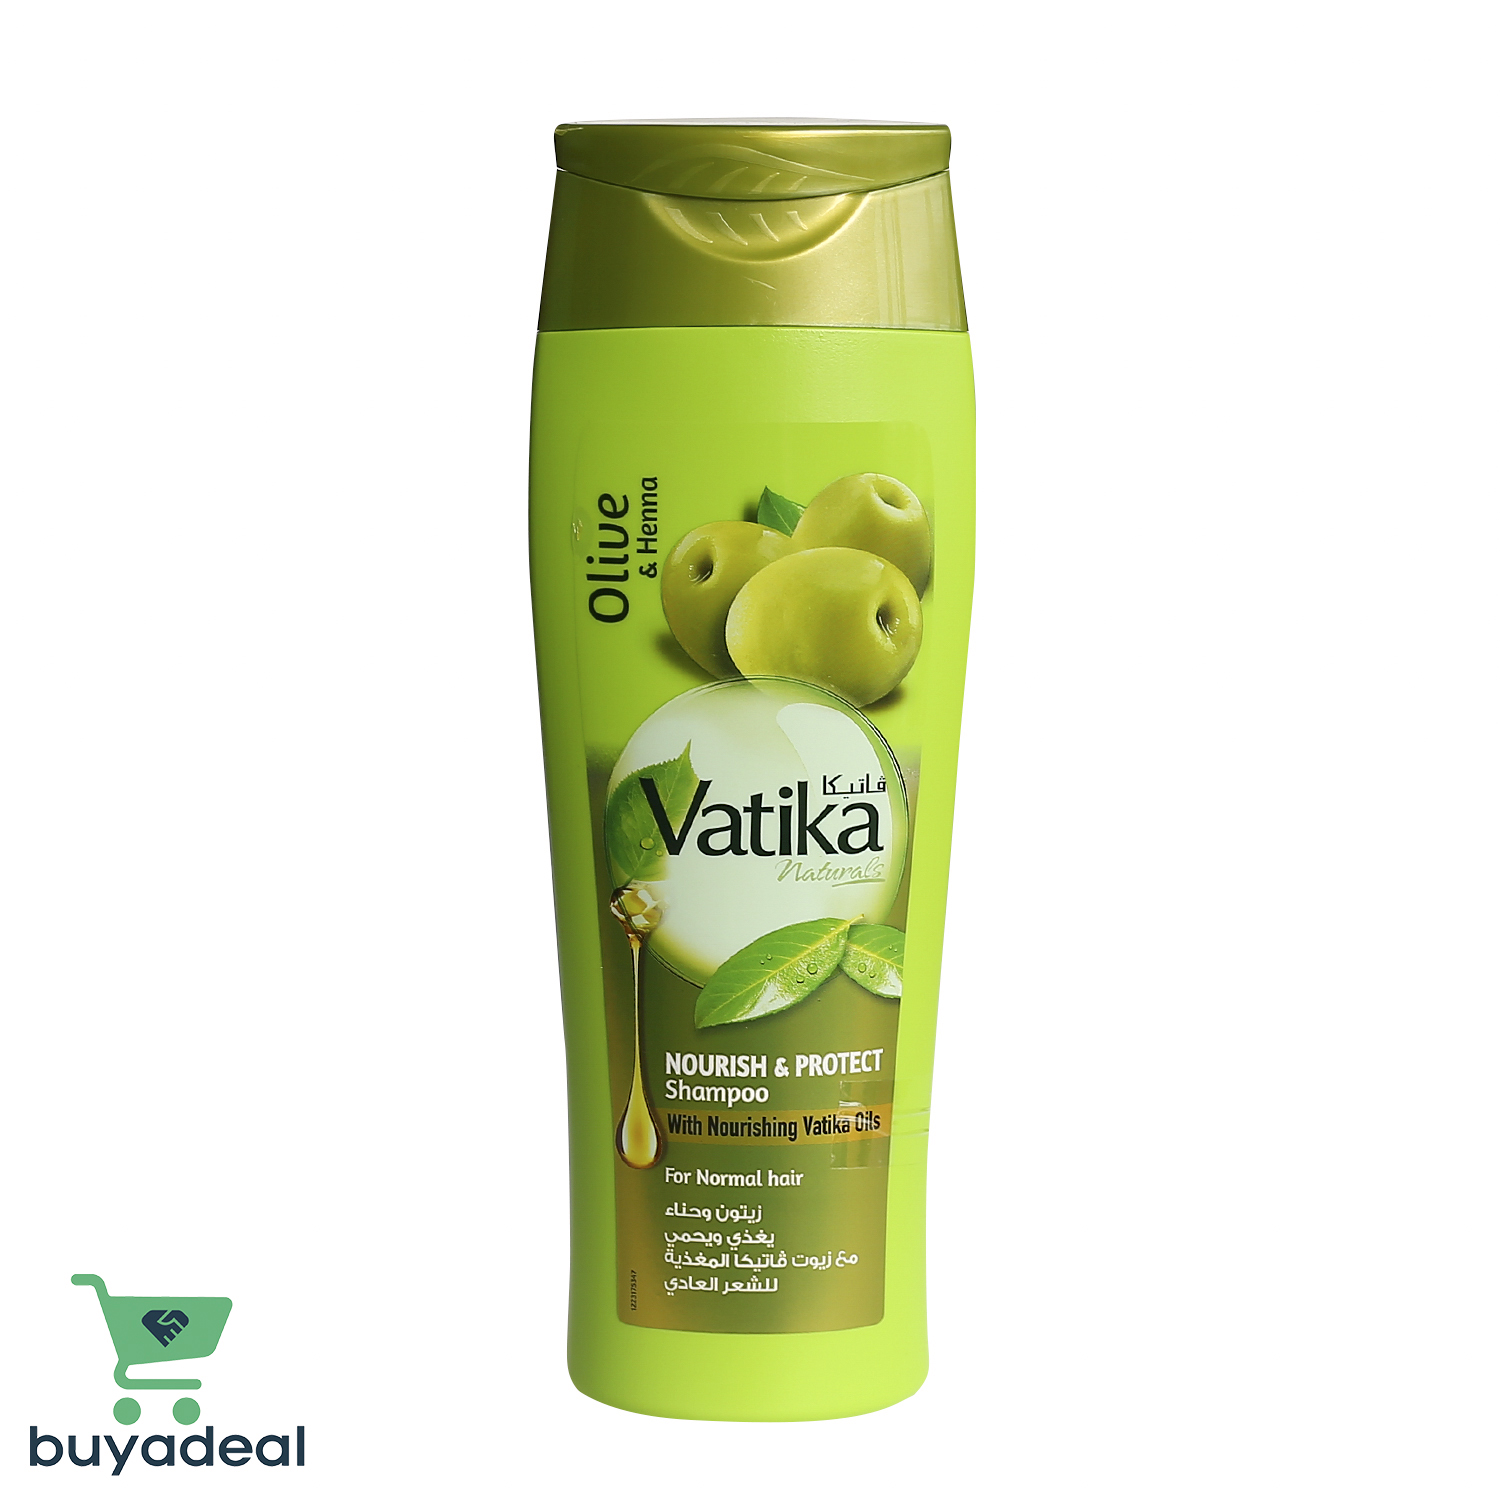 BUYADEAL productVatika Nourish & Protect Shampoo -Olive & Henna 400ml